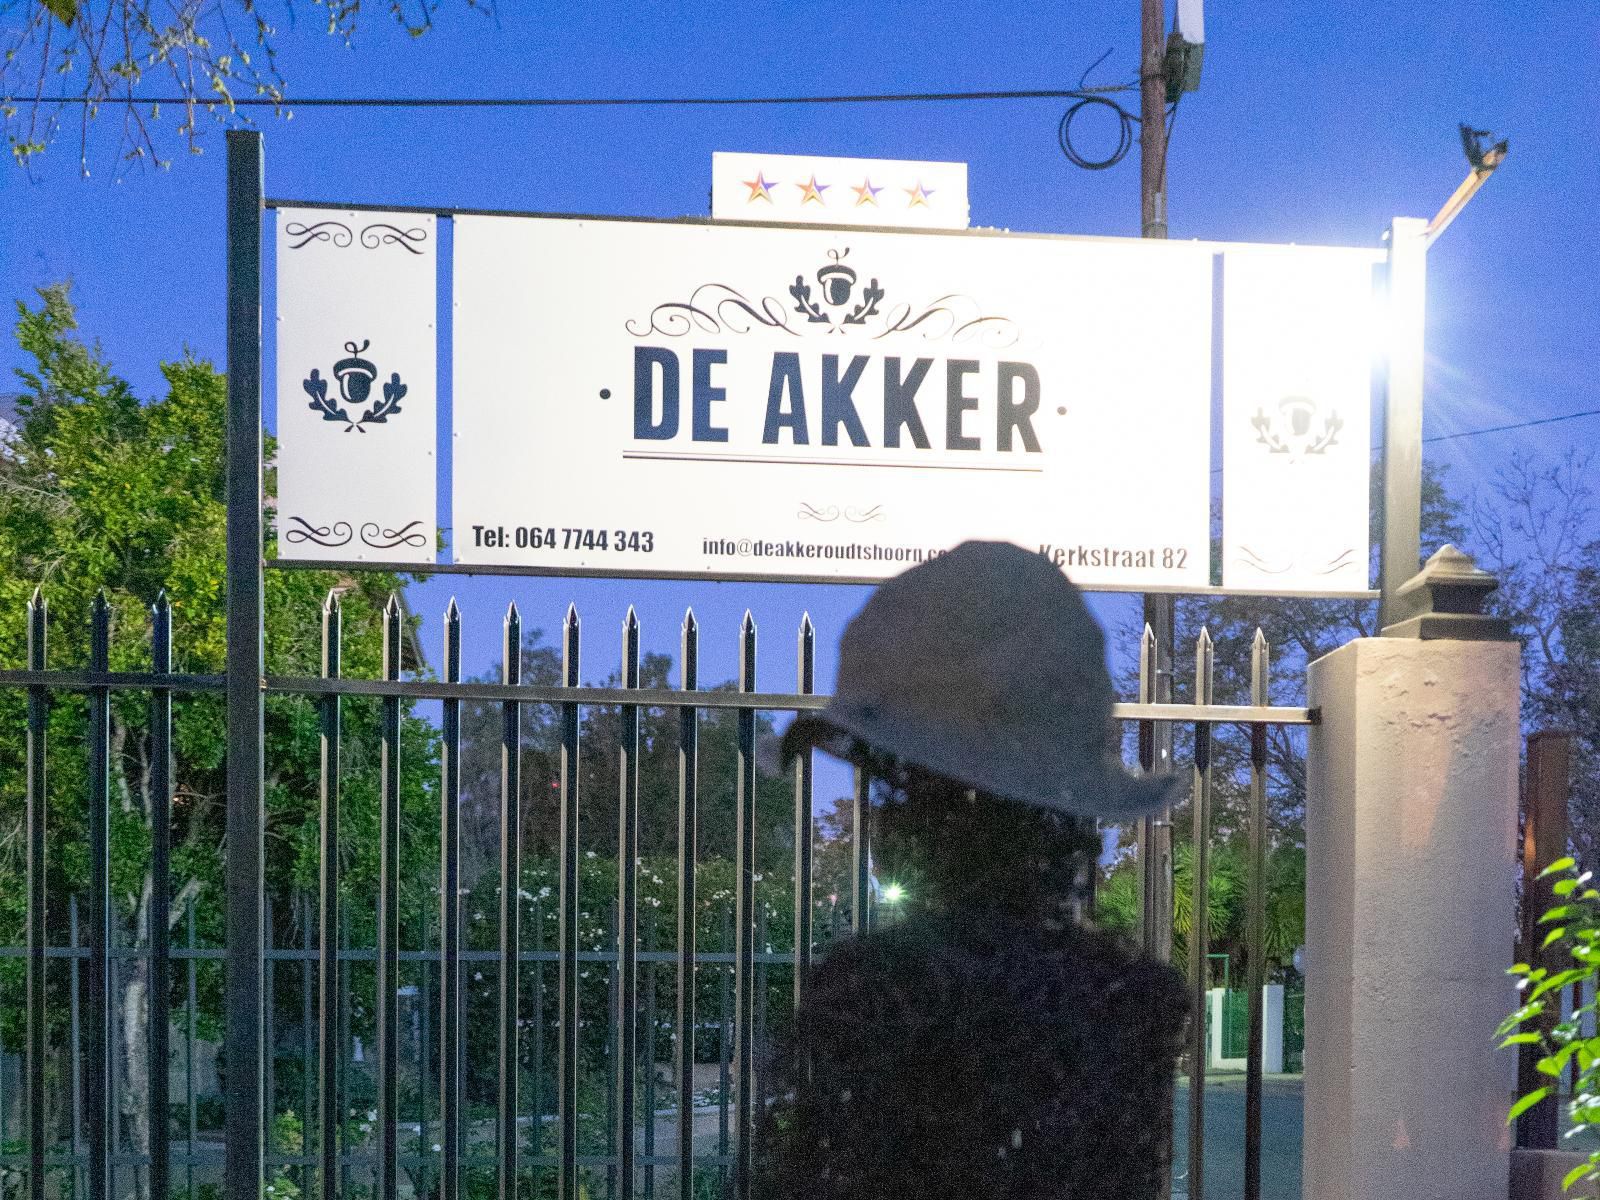 De Akker Guest House Oudtshoorn Western Cape South Africa Beer, Drink, Sign, Cemetery, Religion, Grave